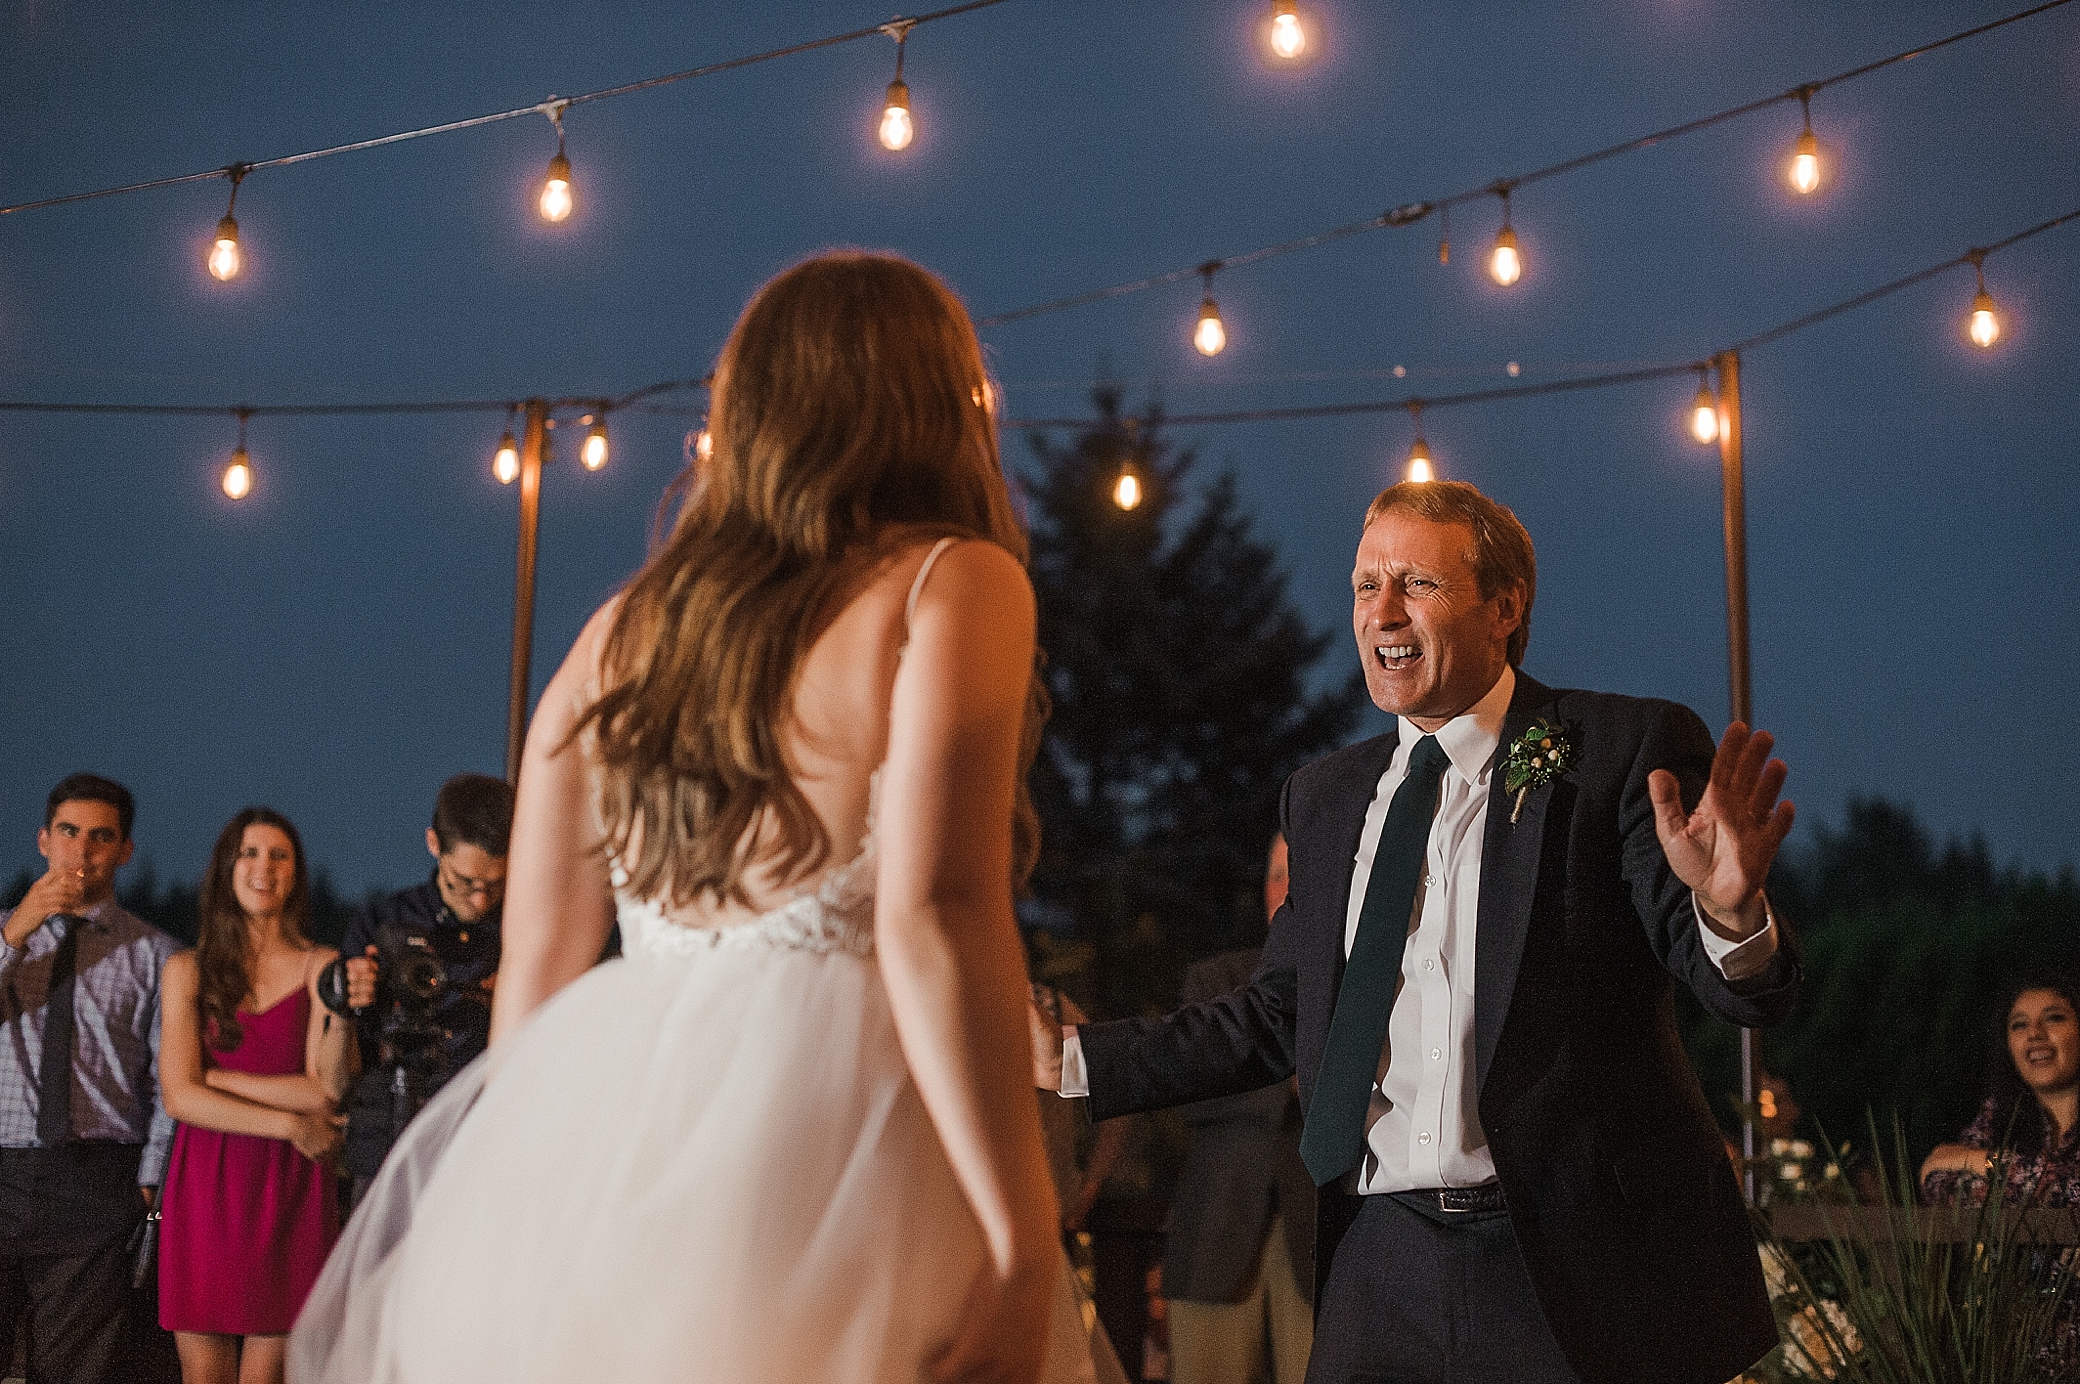 Father daughter dance at backyard wedding reception | Megan Montalvo Photography